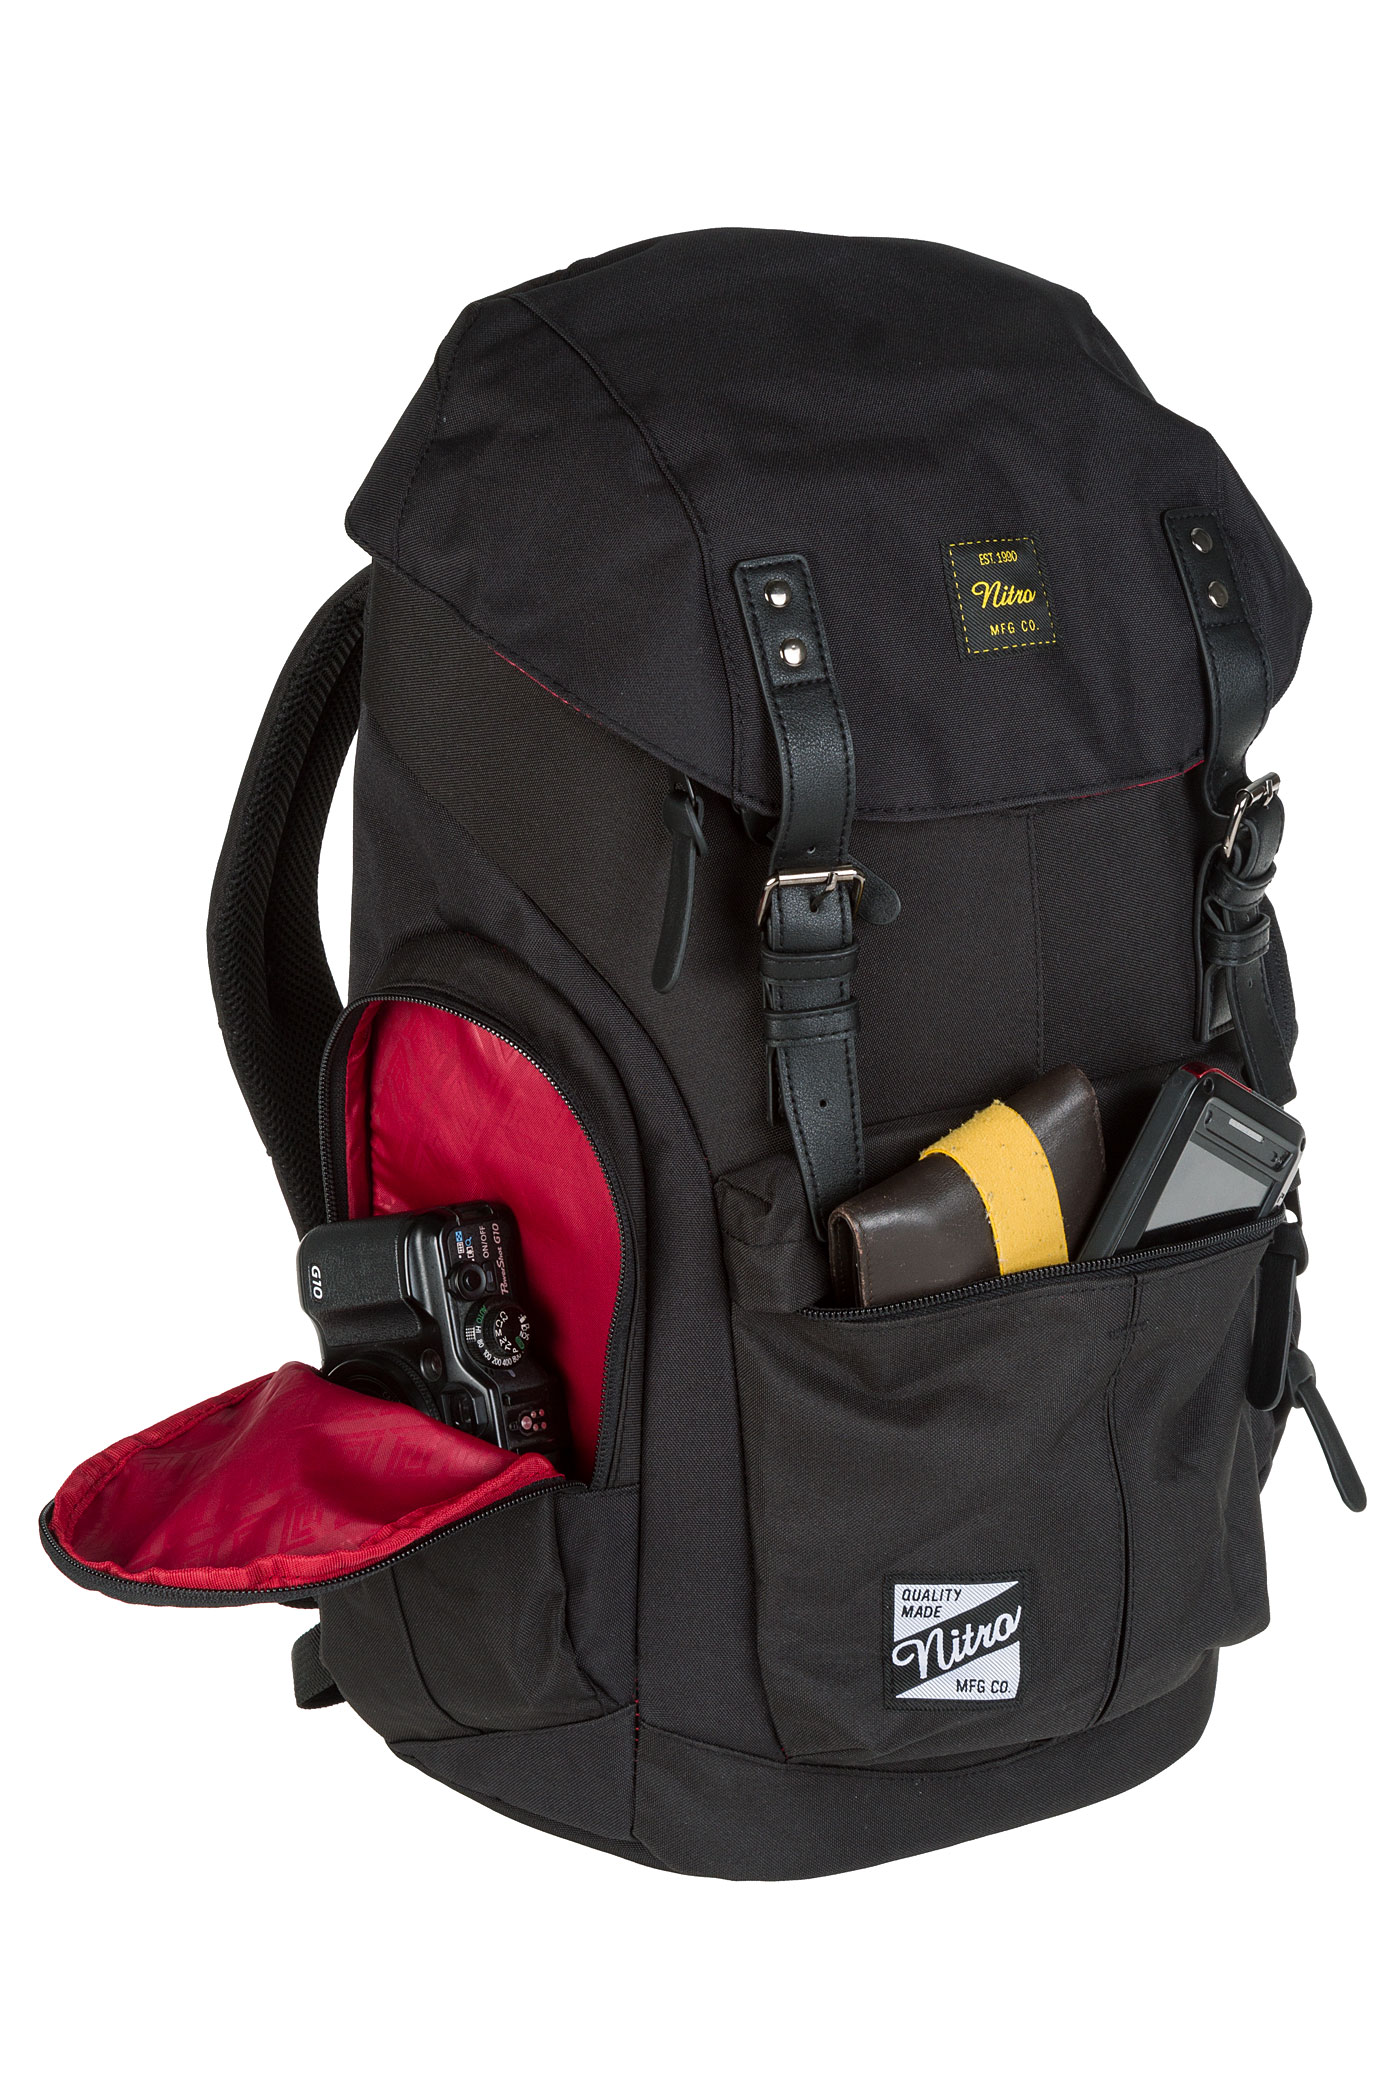 Nitro Daypacker Backpack 32L (true black) buy at skatedeluxe